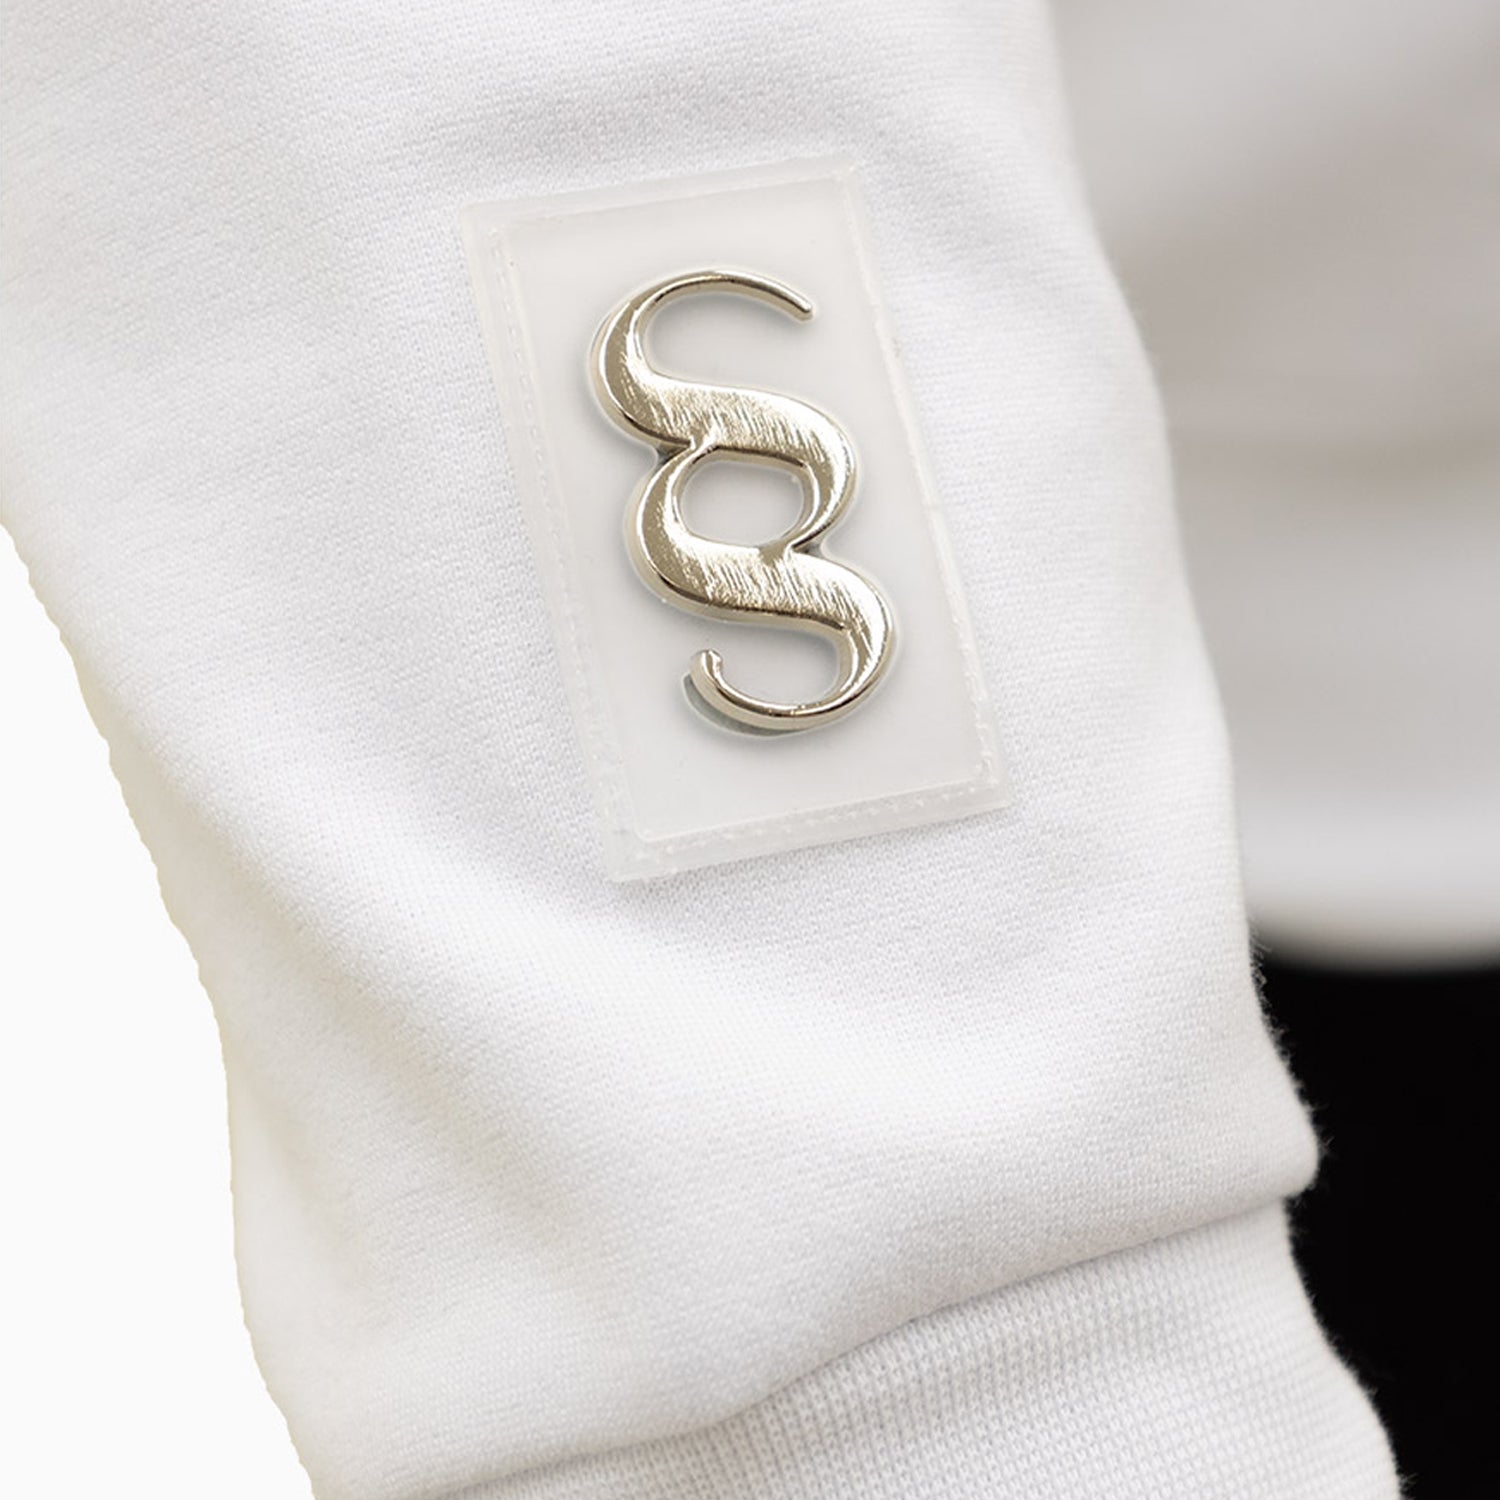 savar-mens-printed-logo-crew-neck-sweatshirt-sc3040-100